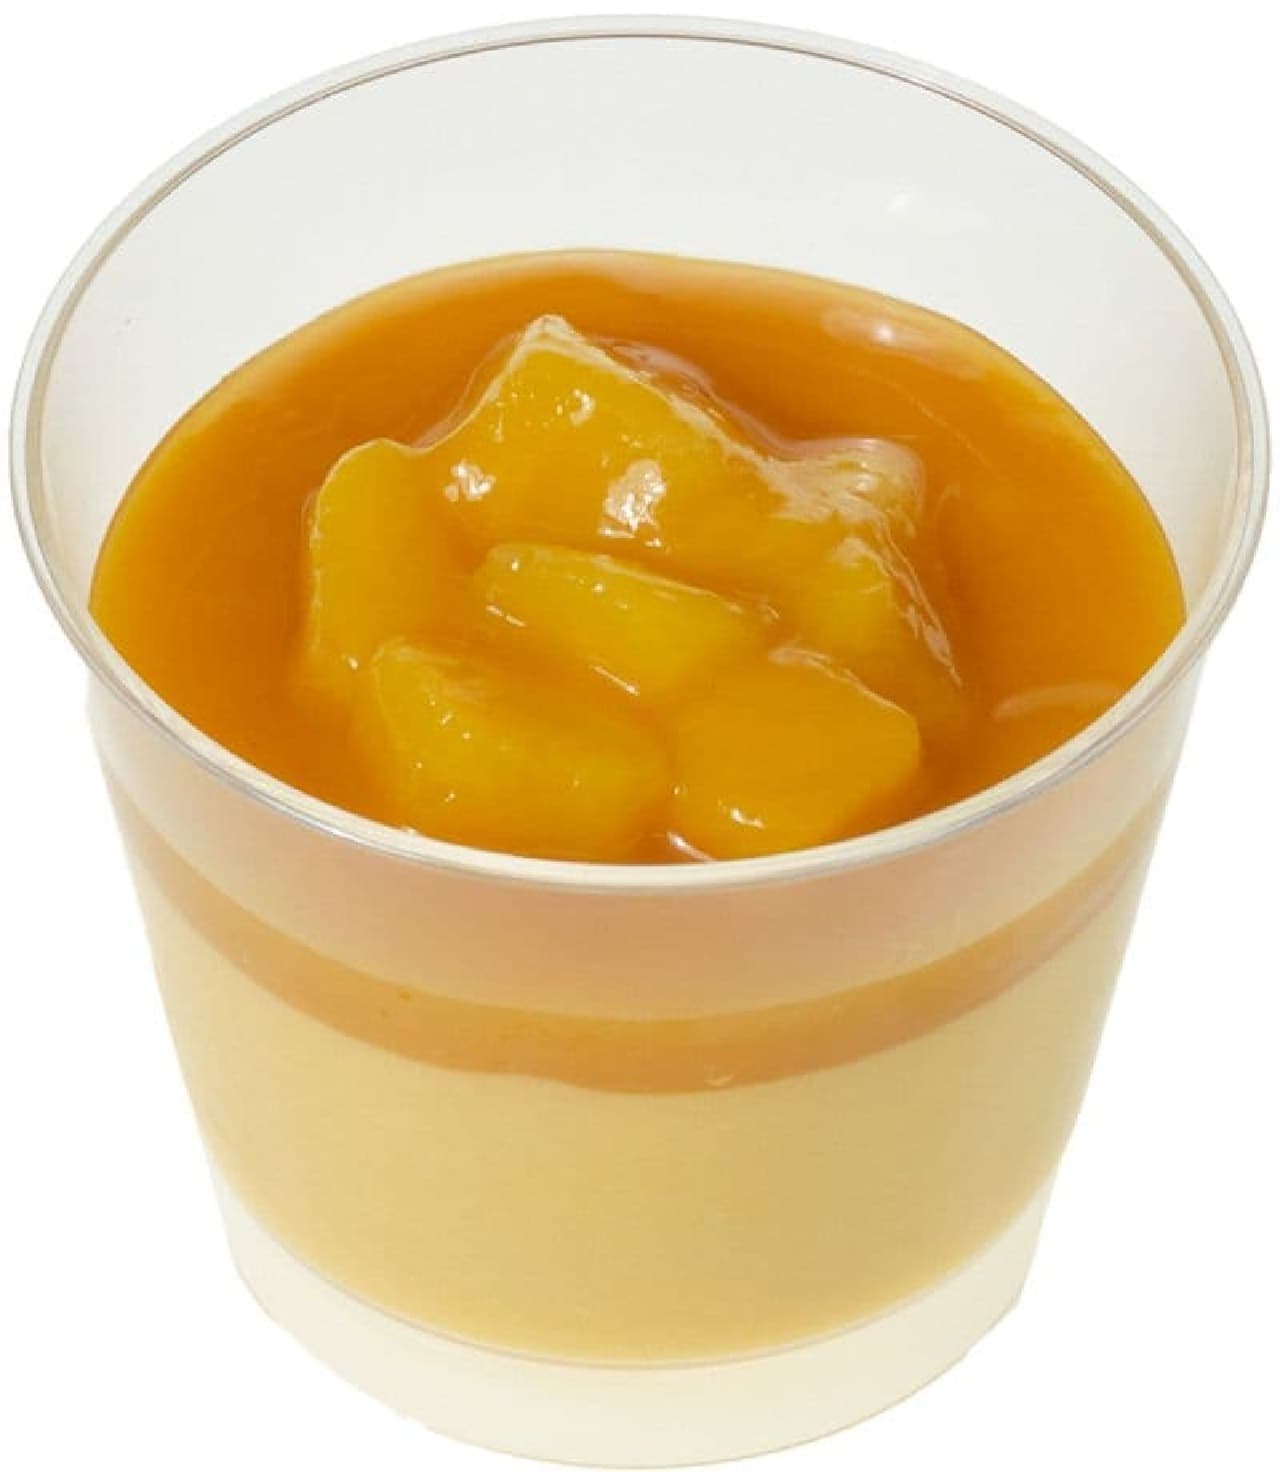 7-ELEVEN "Smooth Mango Pudding